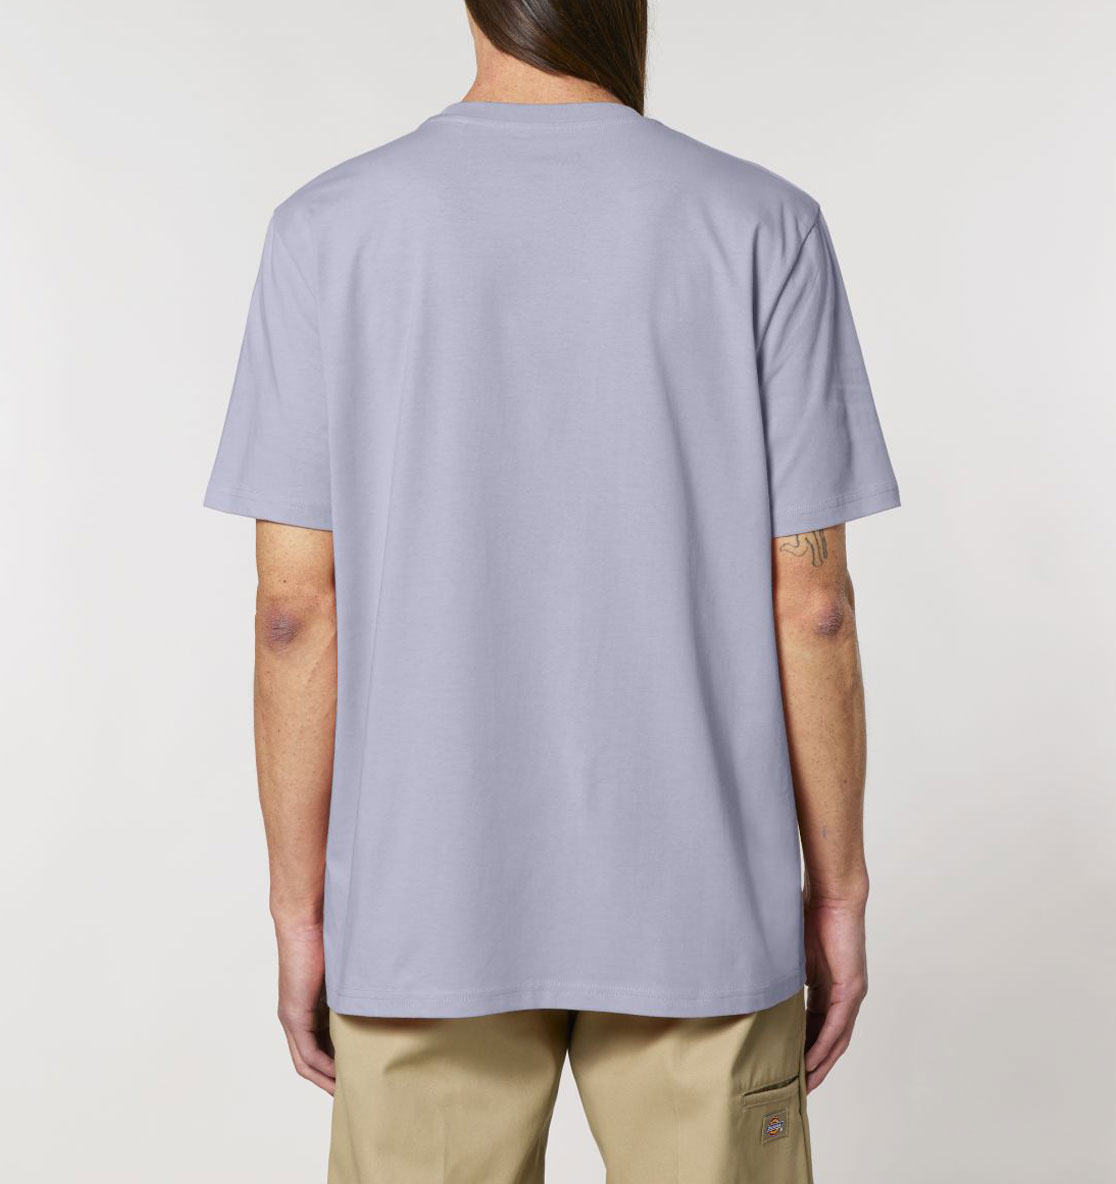 lache-viel-Organic-Shirt-lavender_faibleshop